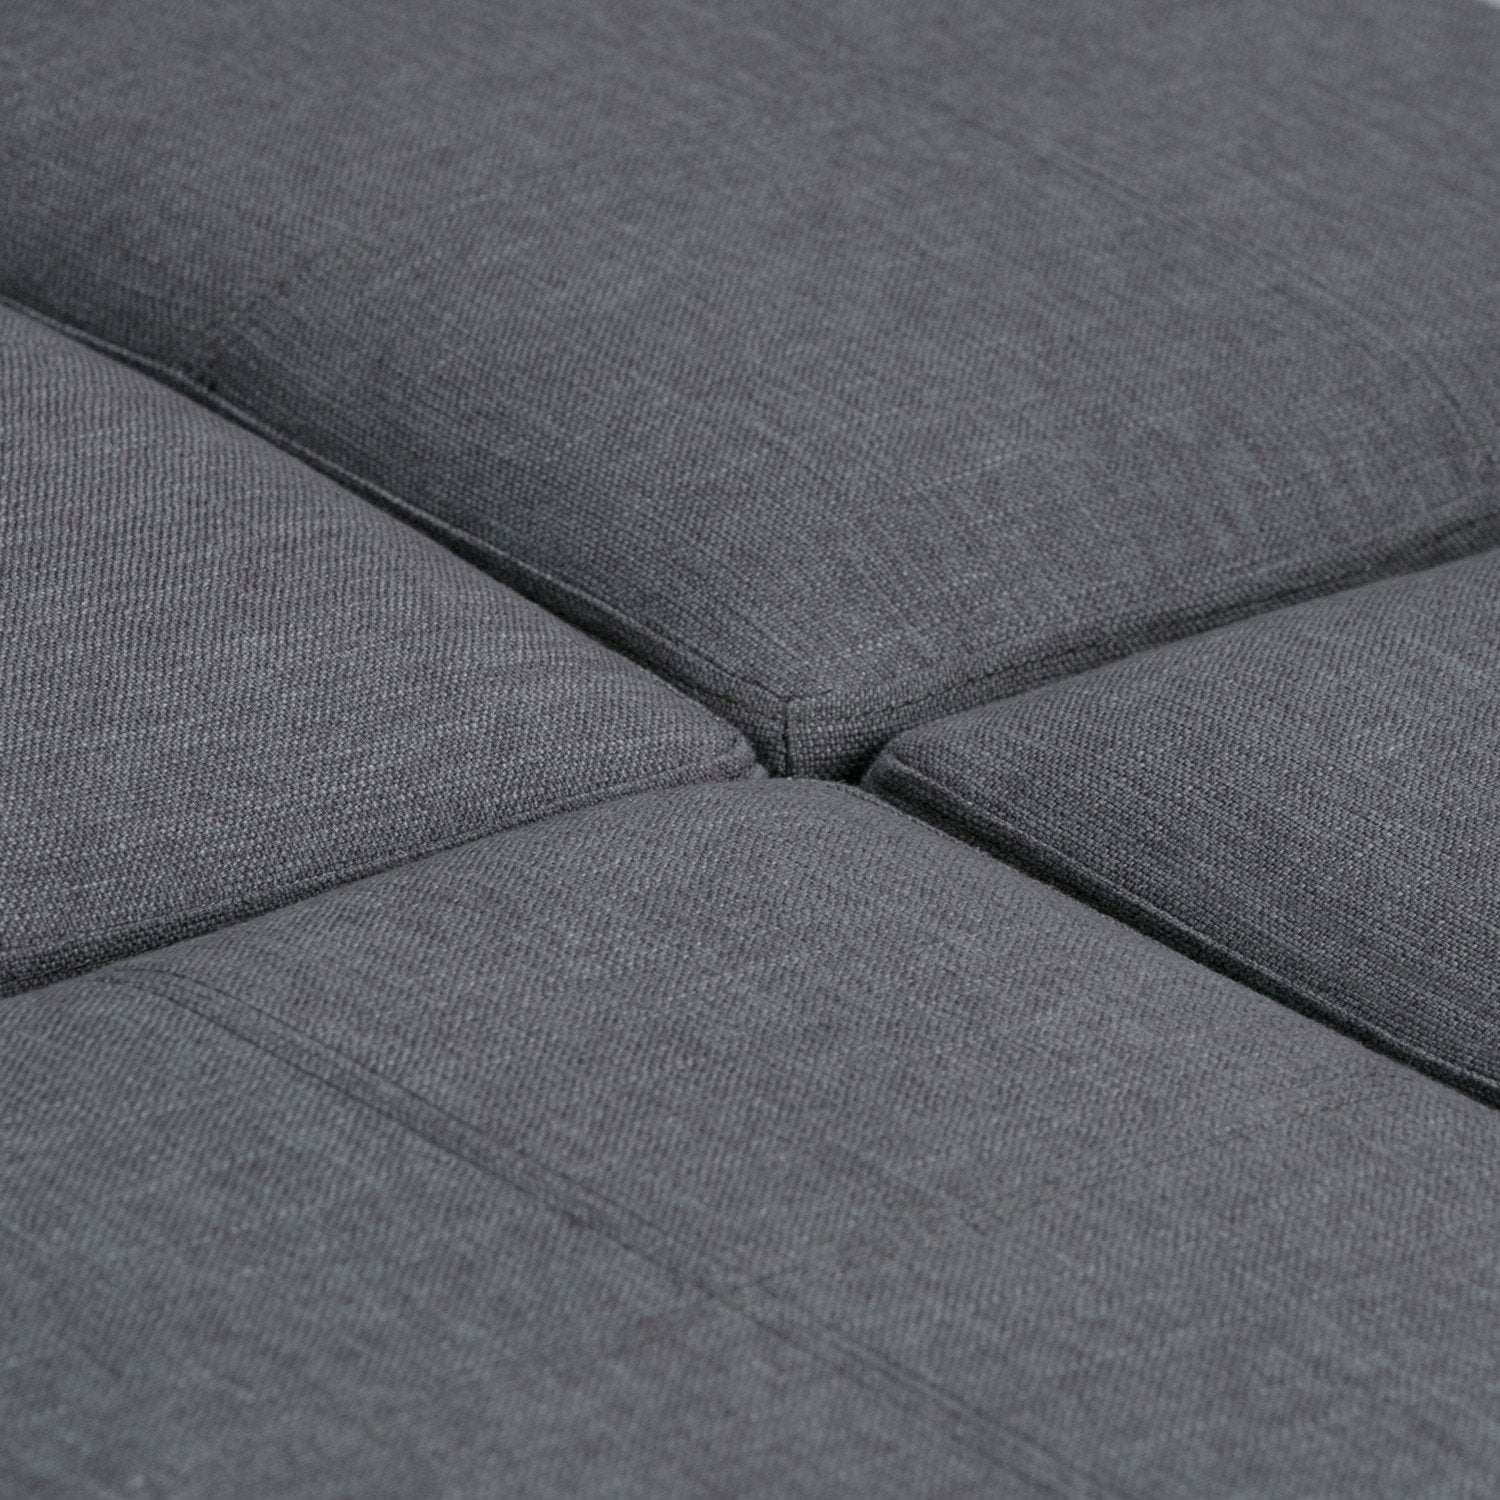 Slate Grey Linen Style Fabric | Avalon Vegan Leather Square Coffee Table Storage Ottoman